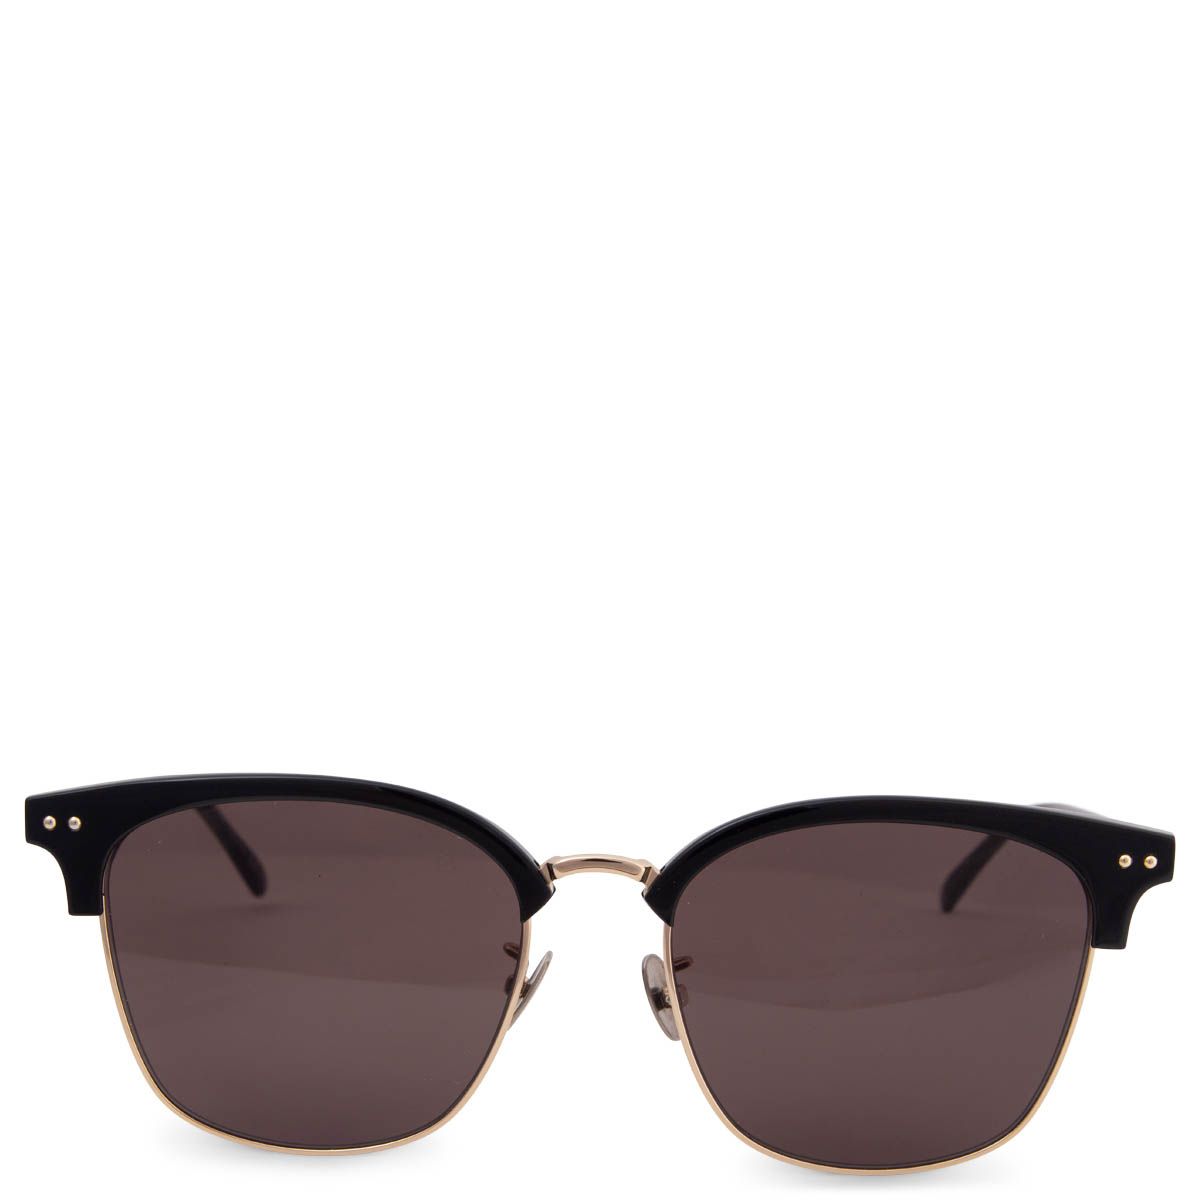 Classic Oval Shaped Semi-Rimless Half Frame Horn Rimmed Sunglasses -  sunglass.la